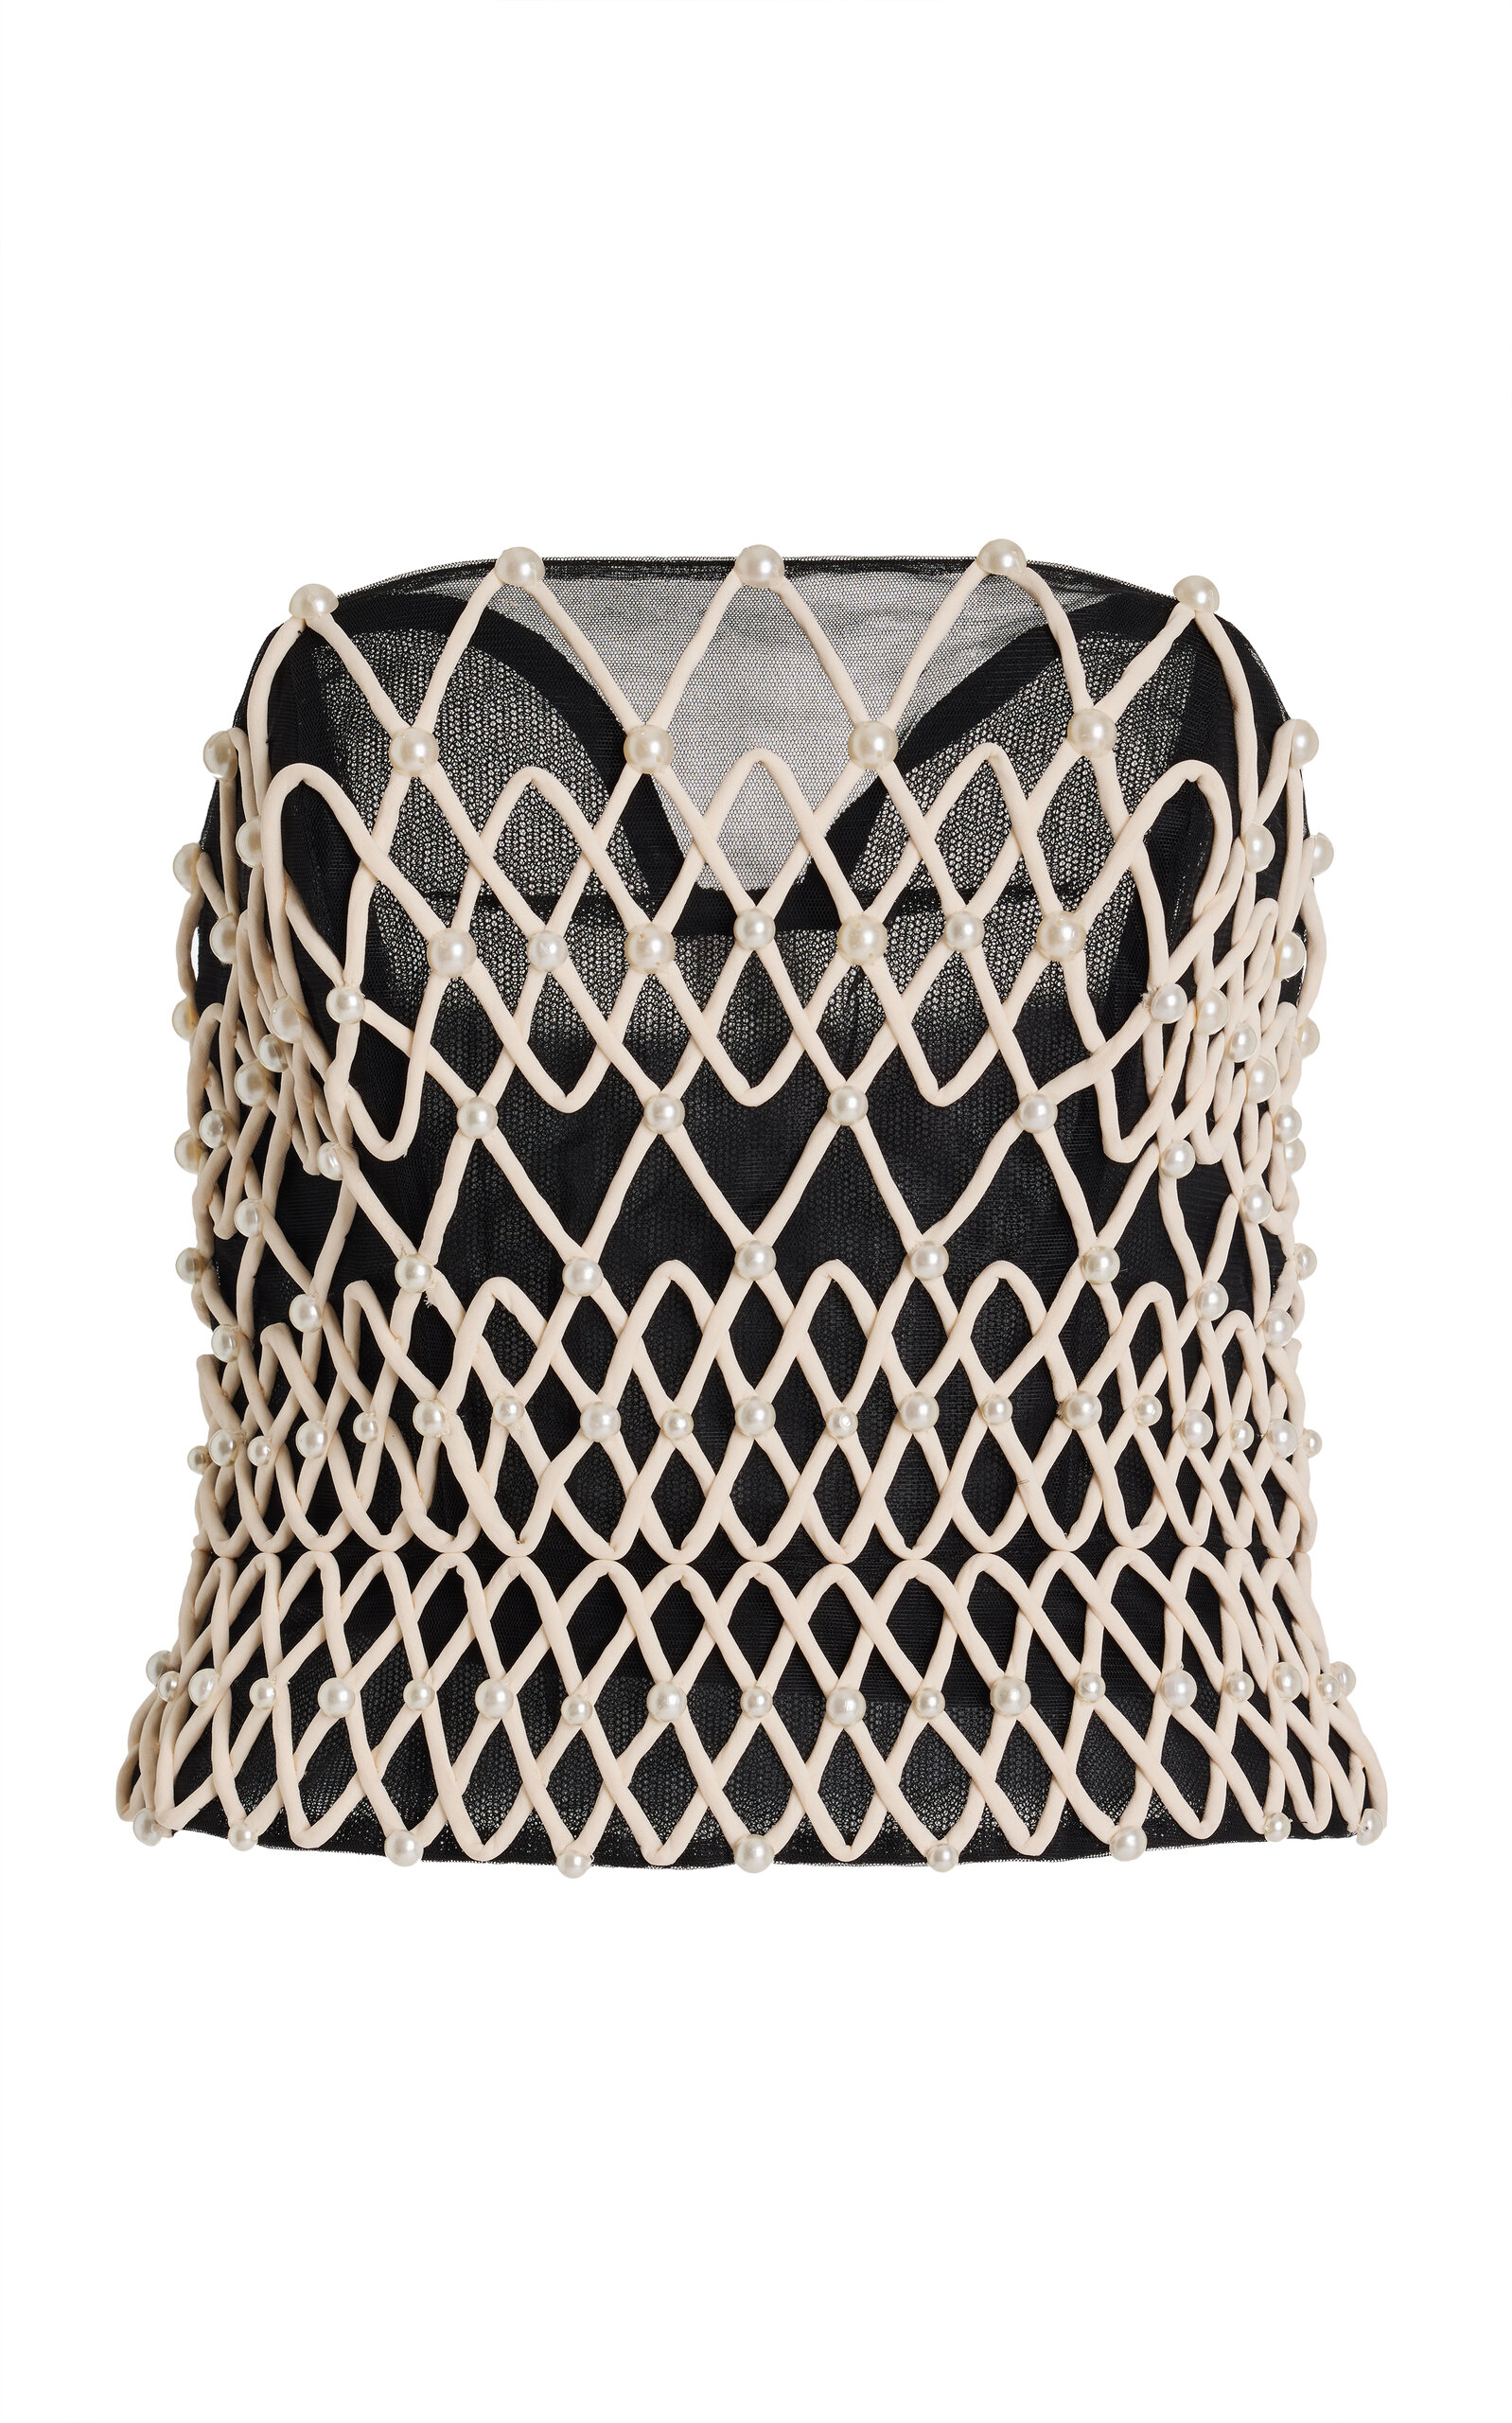 Carolina Herrera - Exclusive Embroidered Strapless Bustier Top - Black/white - US 2 - Moda Operandi